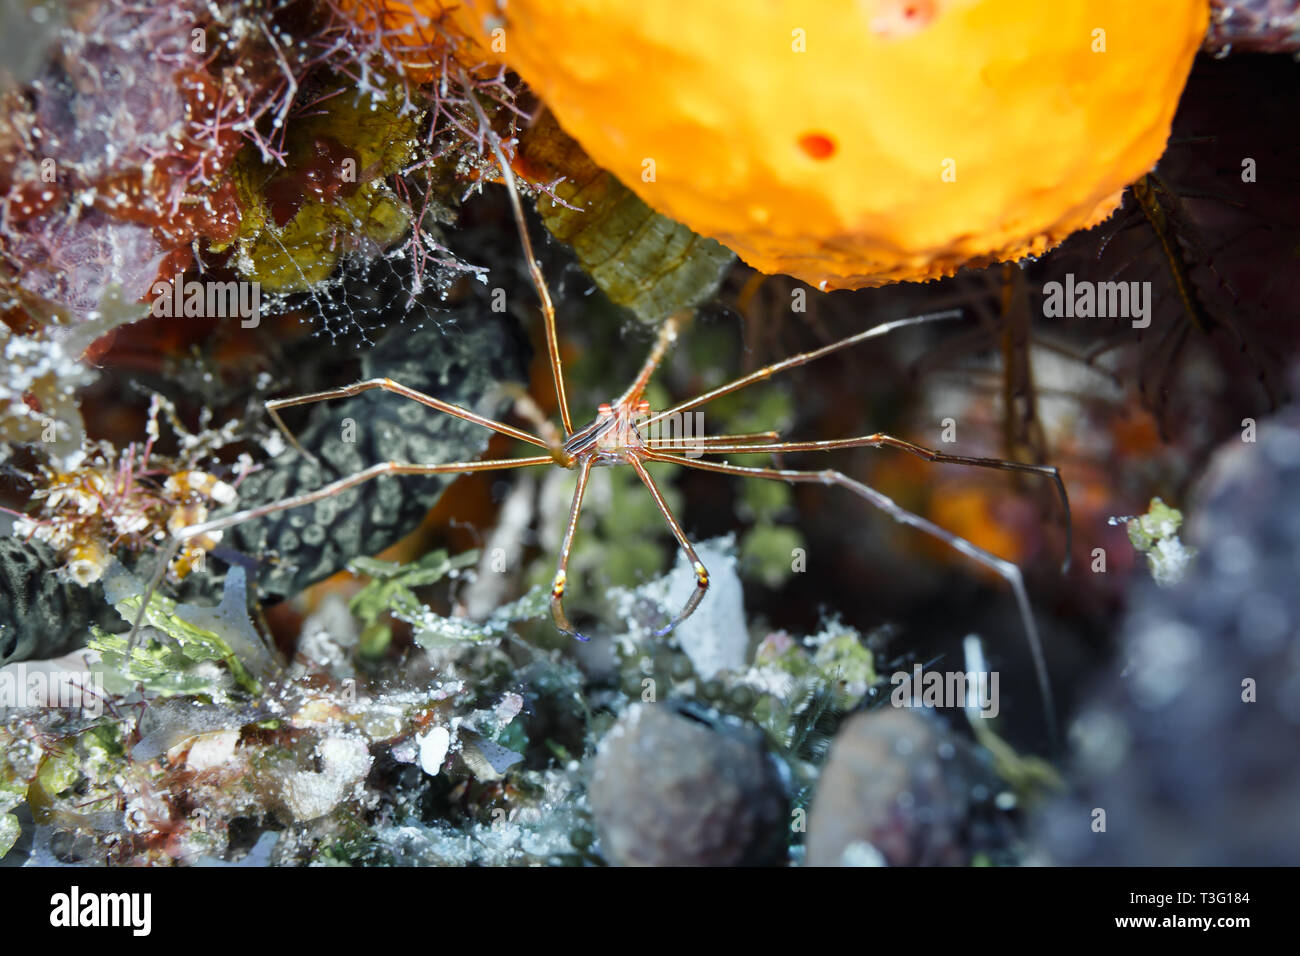 Stenorhynchus seticornis, Yellowline Arrow Crab, hides under a yellow sponge Stock Photo